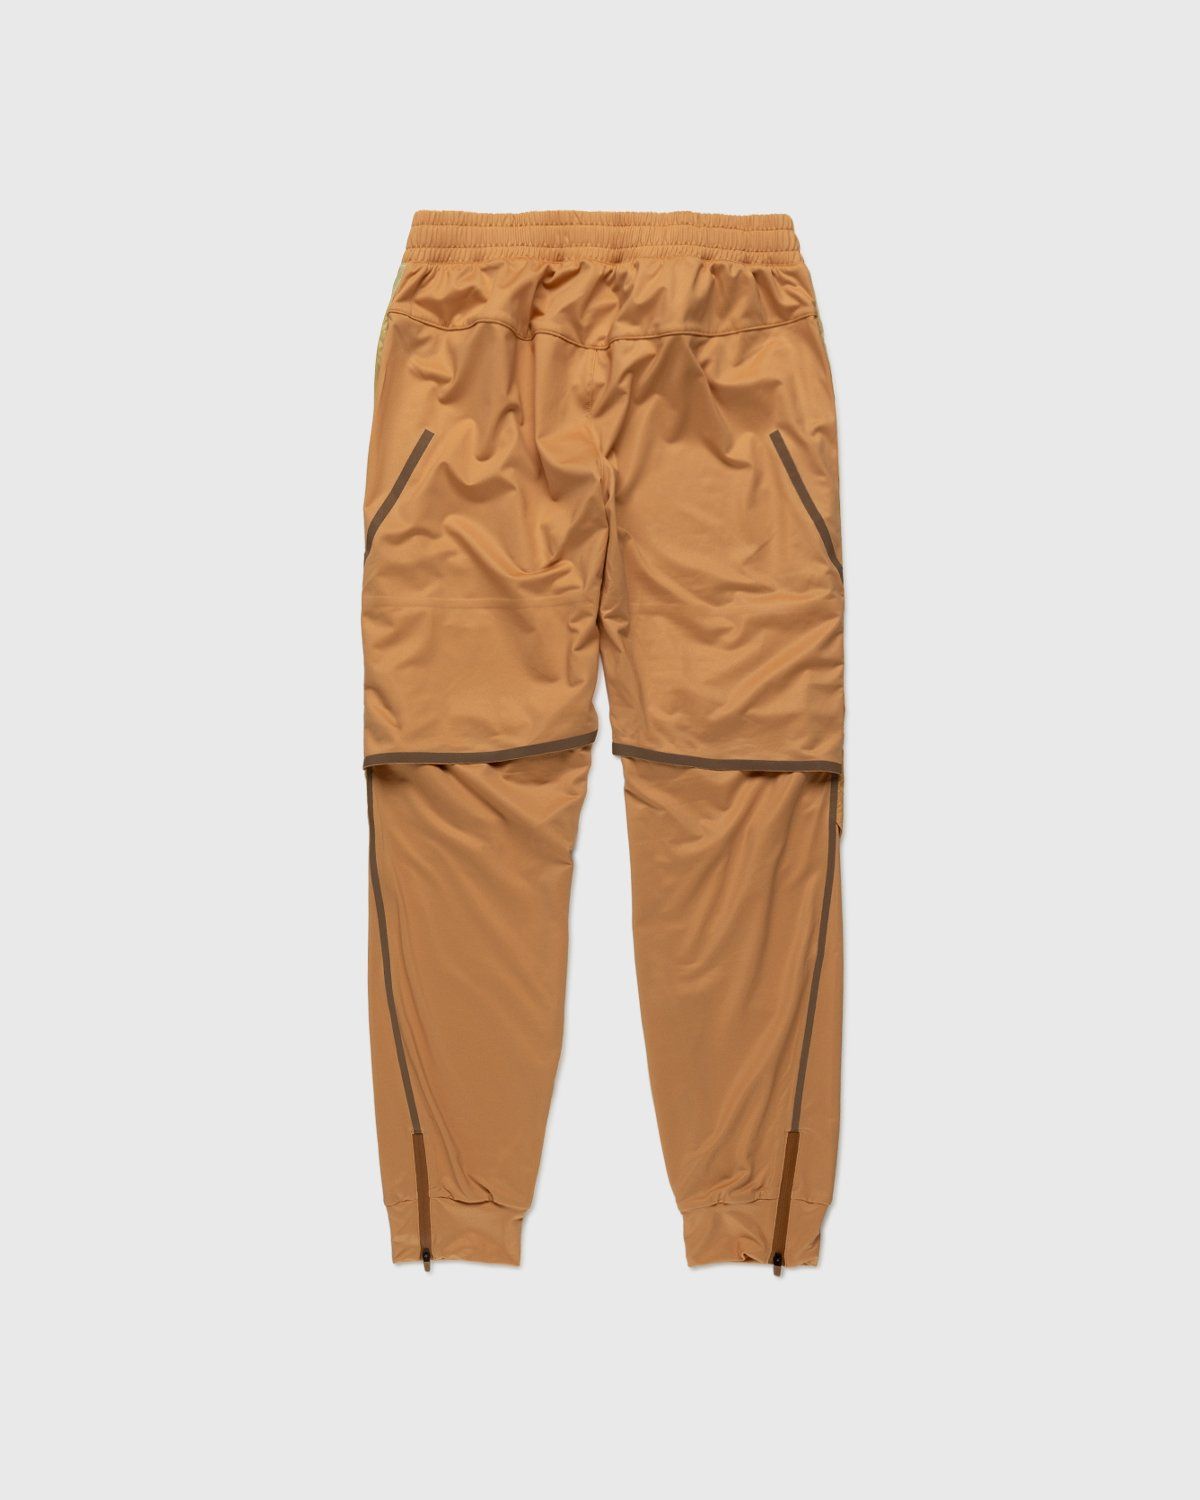 Loewe x On – Women's Technical Running Pants Gradient Orange - Active Pants - Orange - Image 2